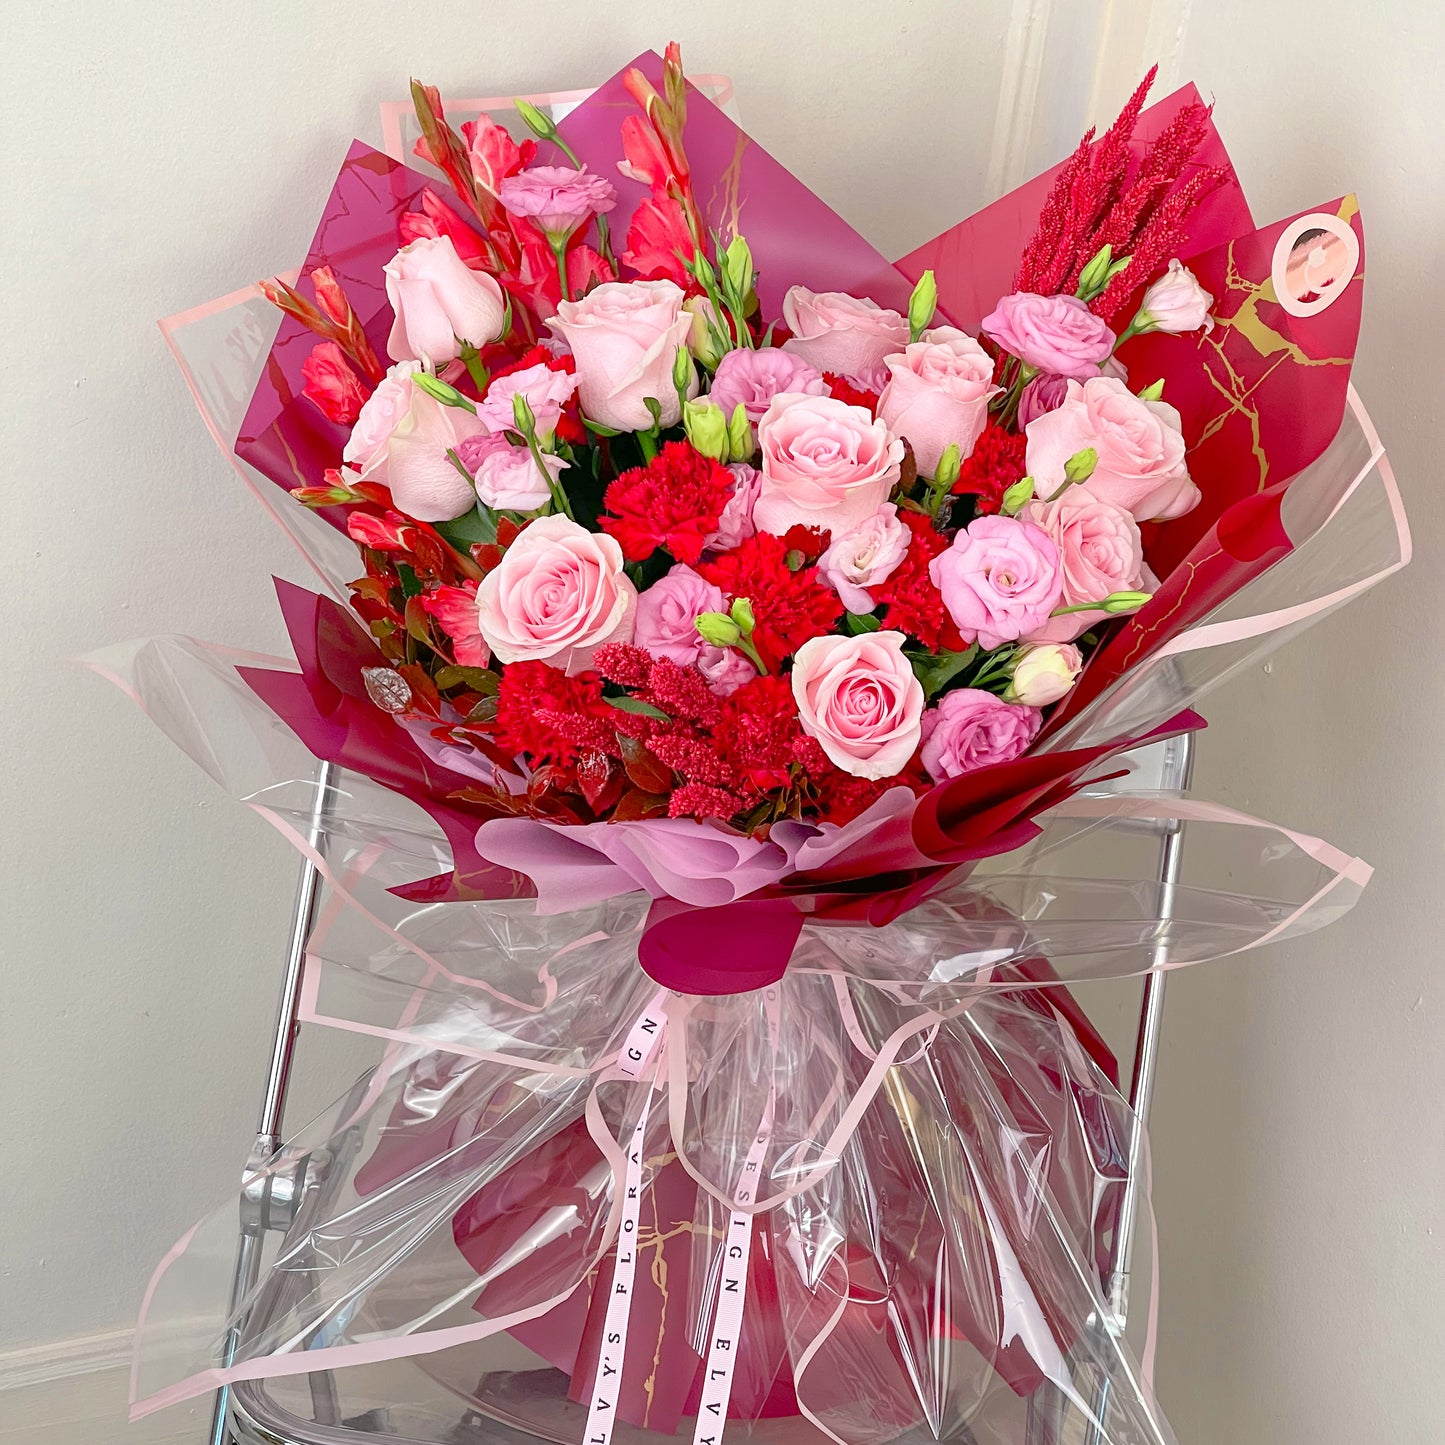 Elegance of Red and Pink Flowers | Elvy's Floral Design